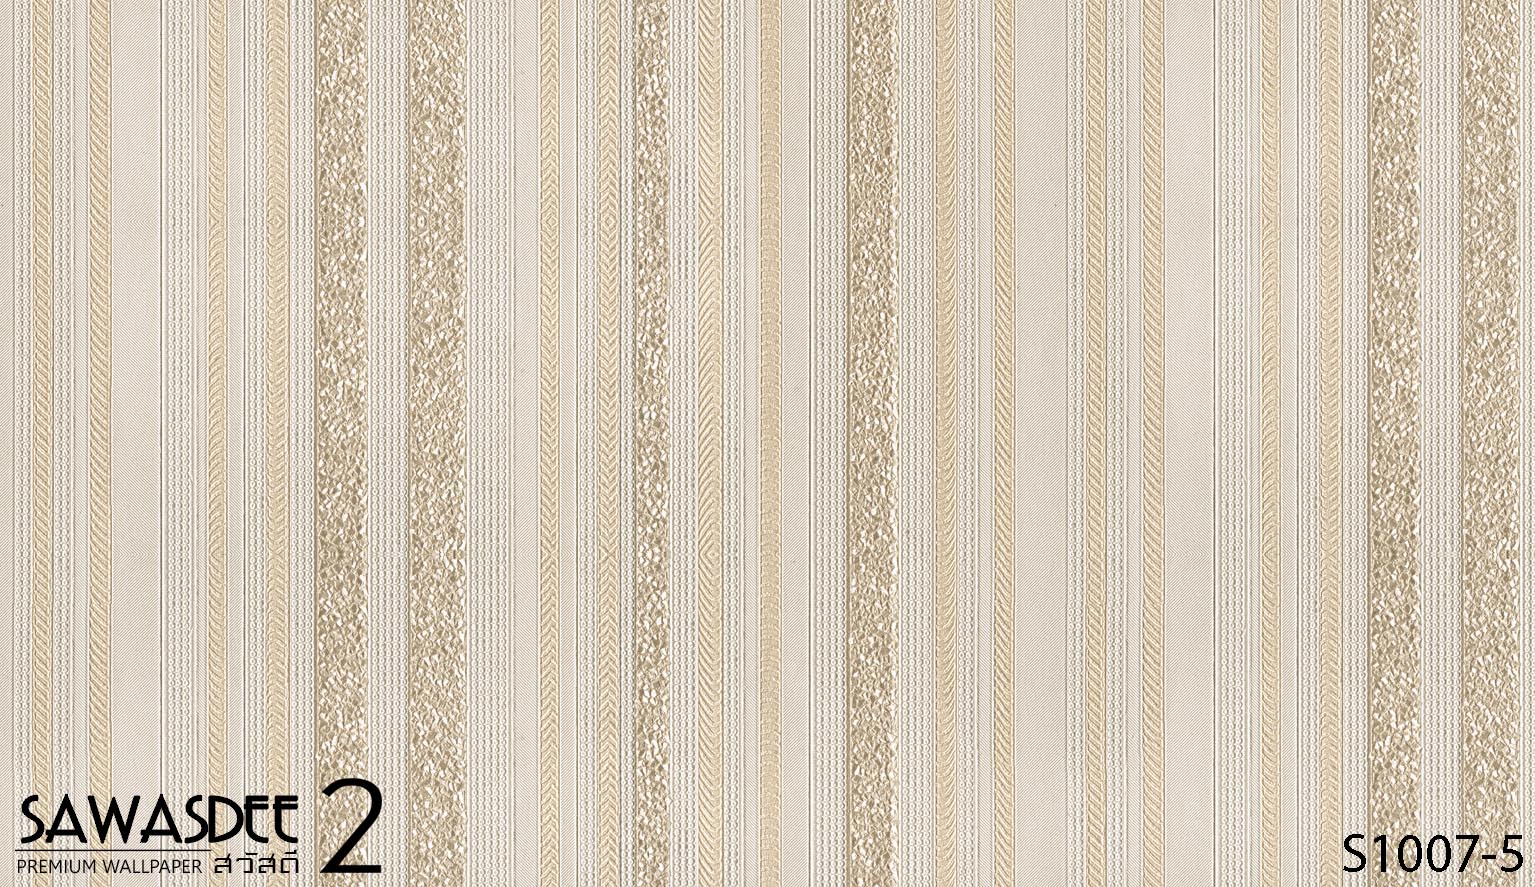 Wallpaper (SAWASDEE 2) S1007-5